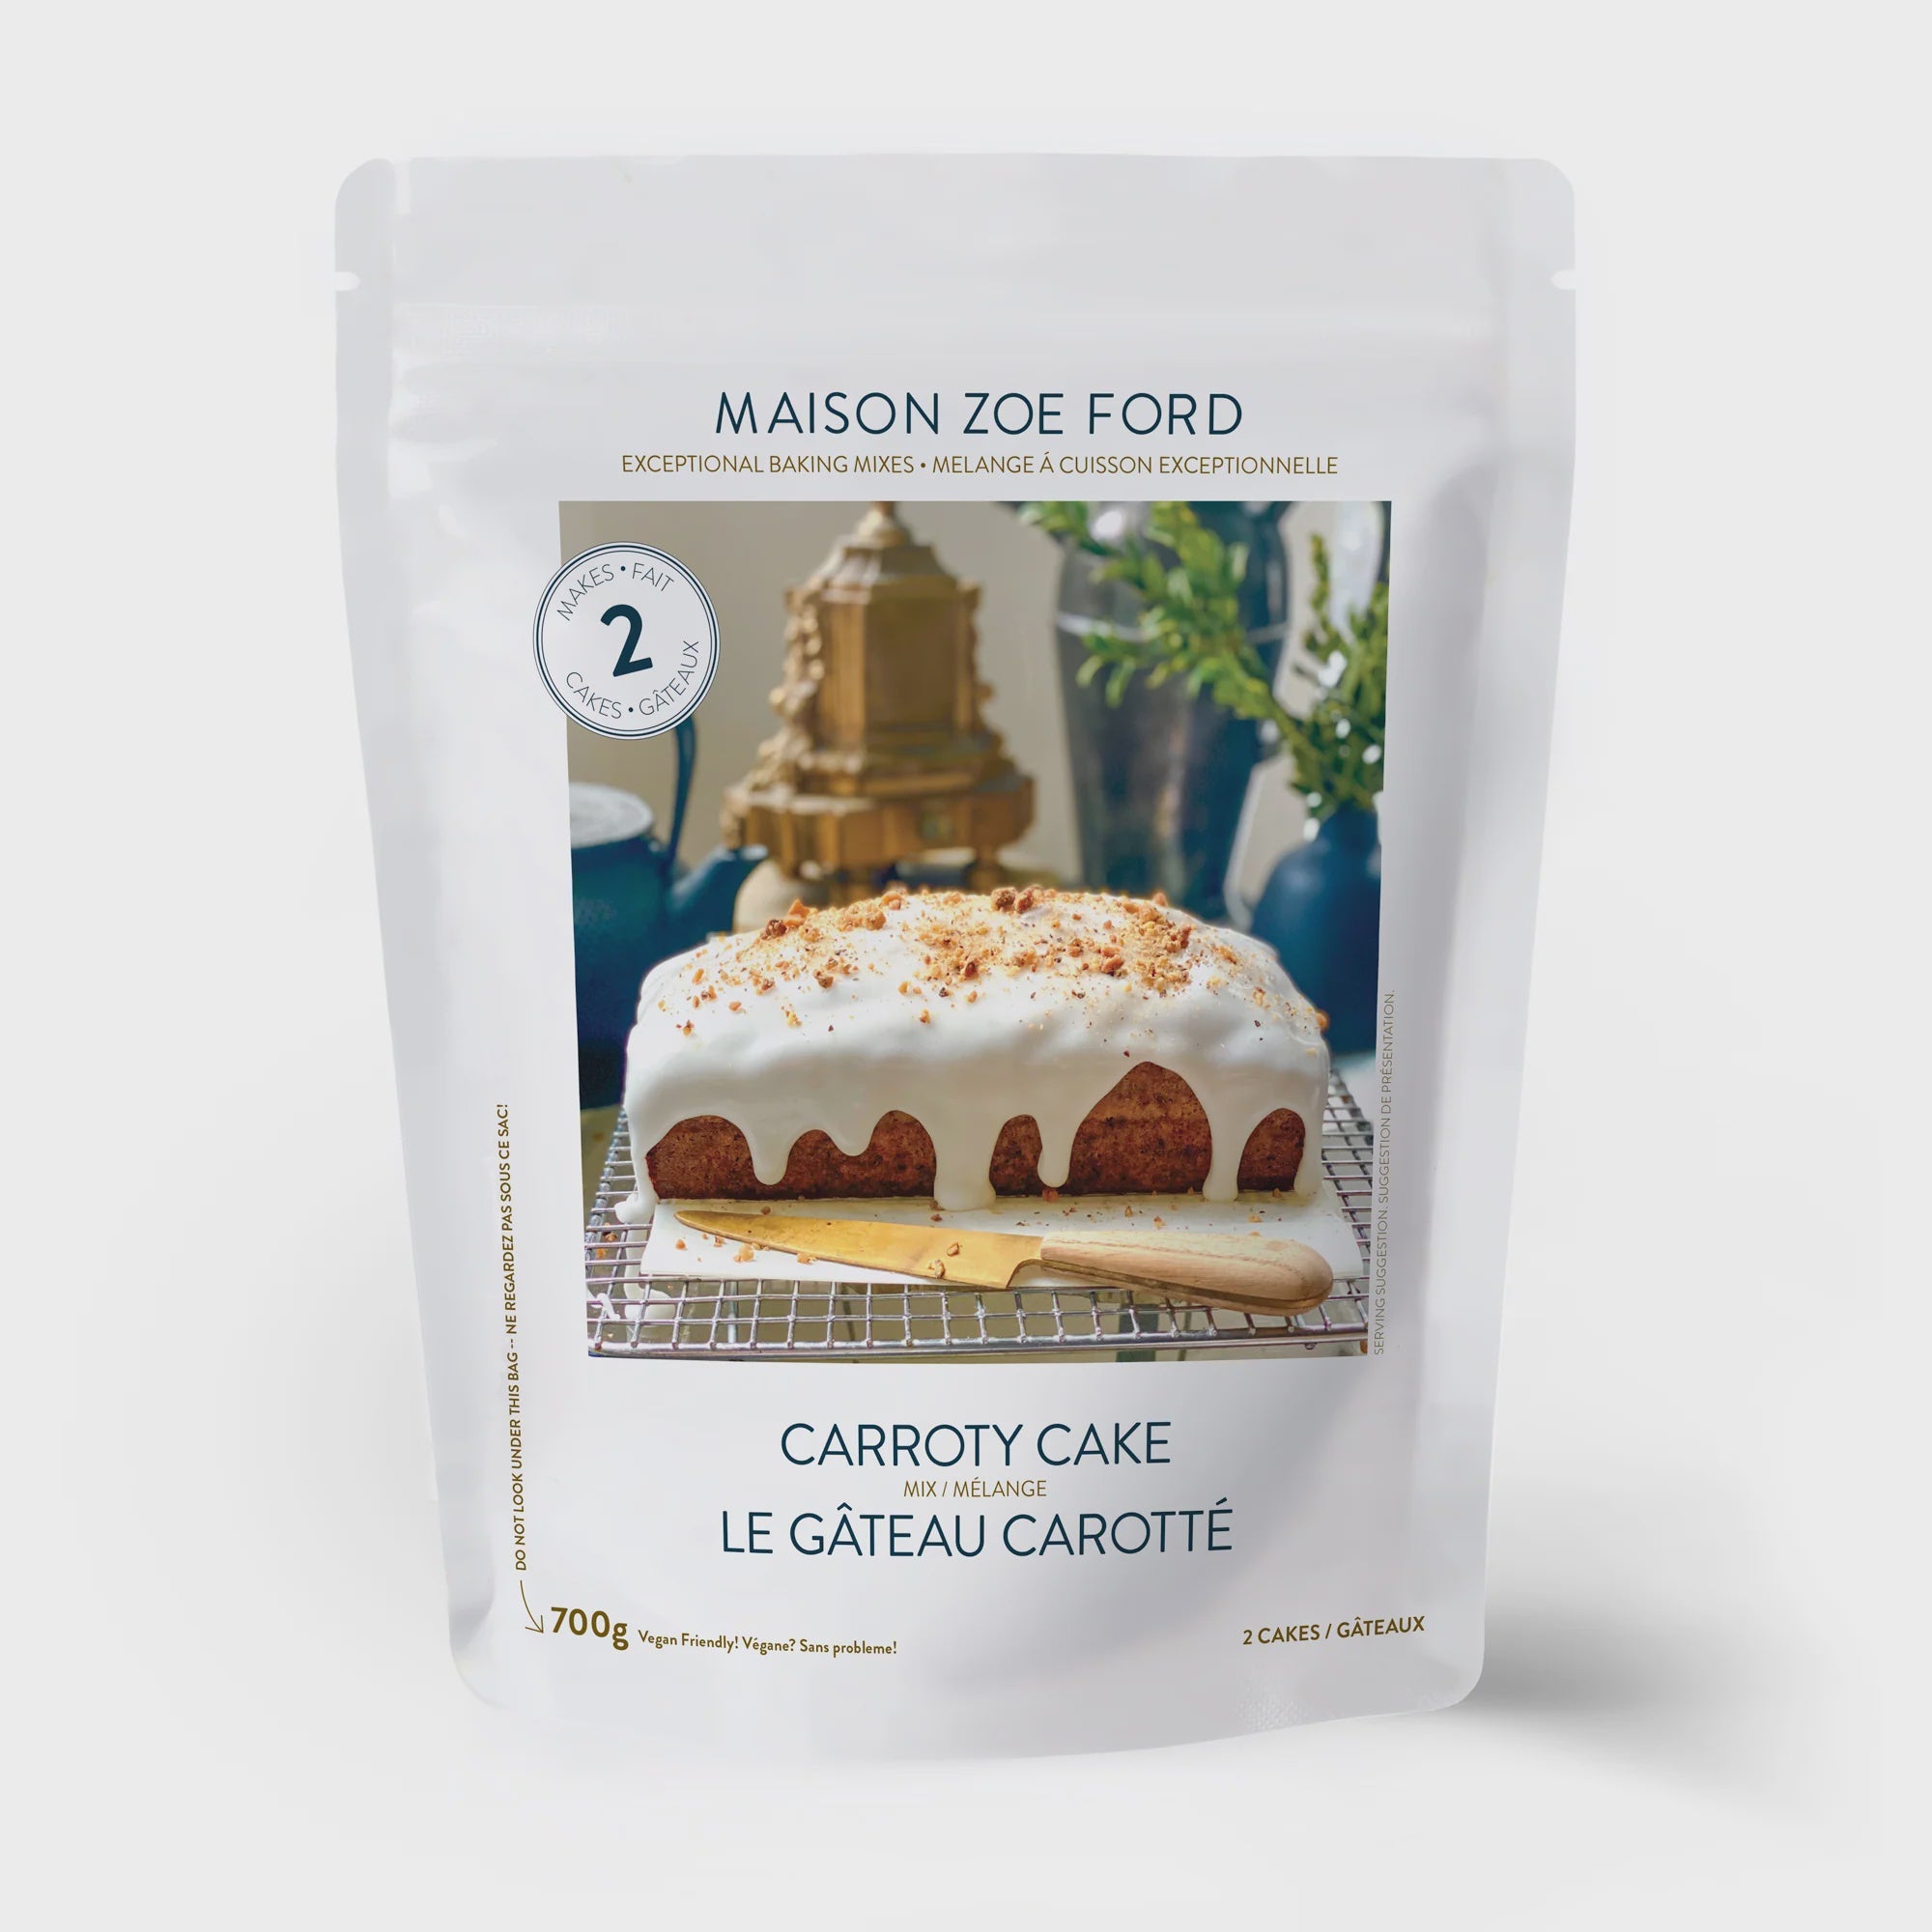 MAISON ZOE FORD - CARROTY CAKE MIX